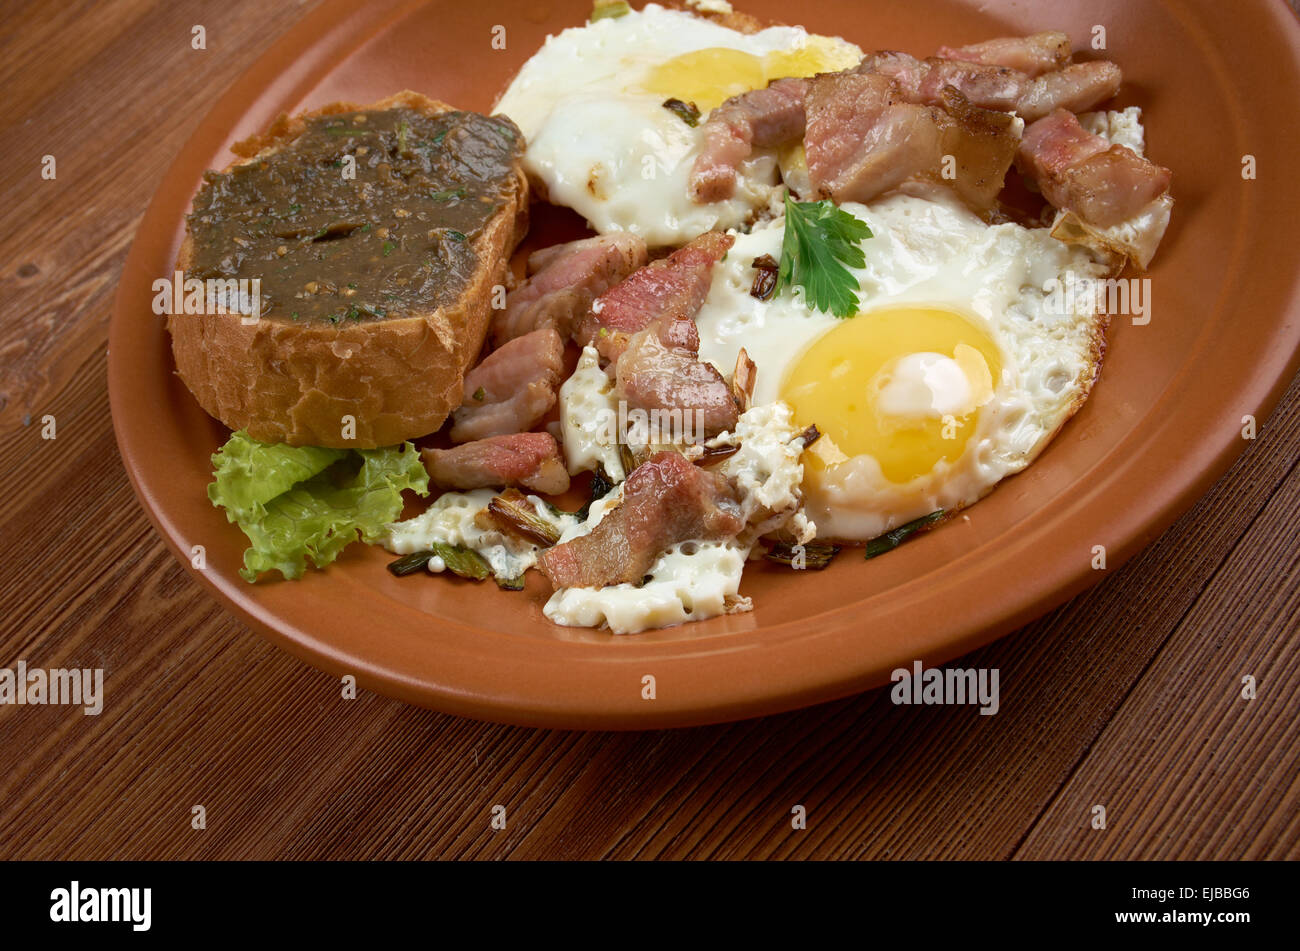 European country breakfast Stock Photo